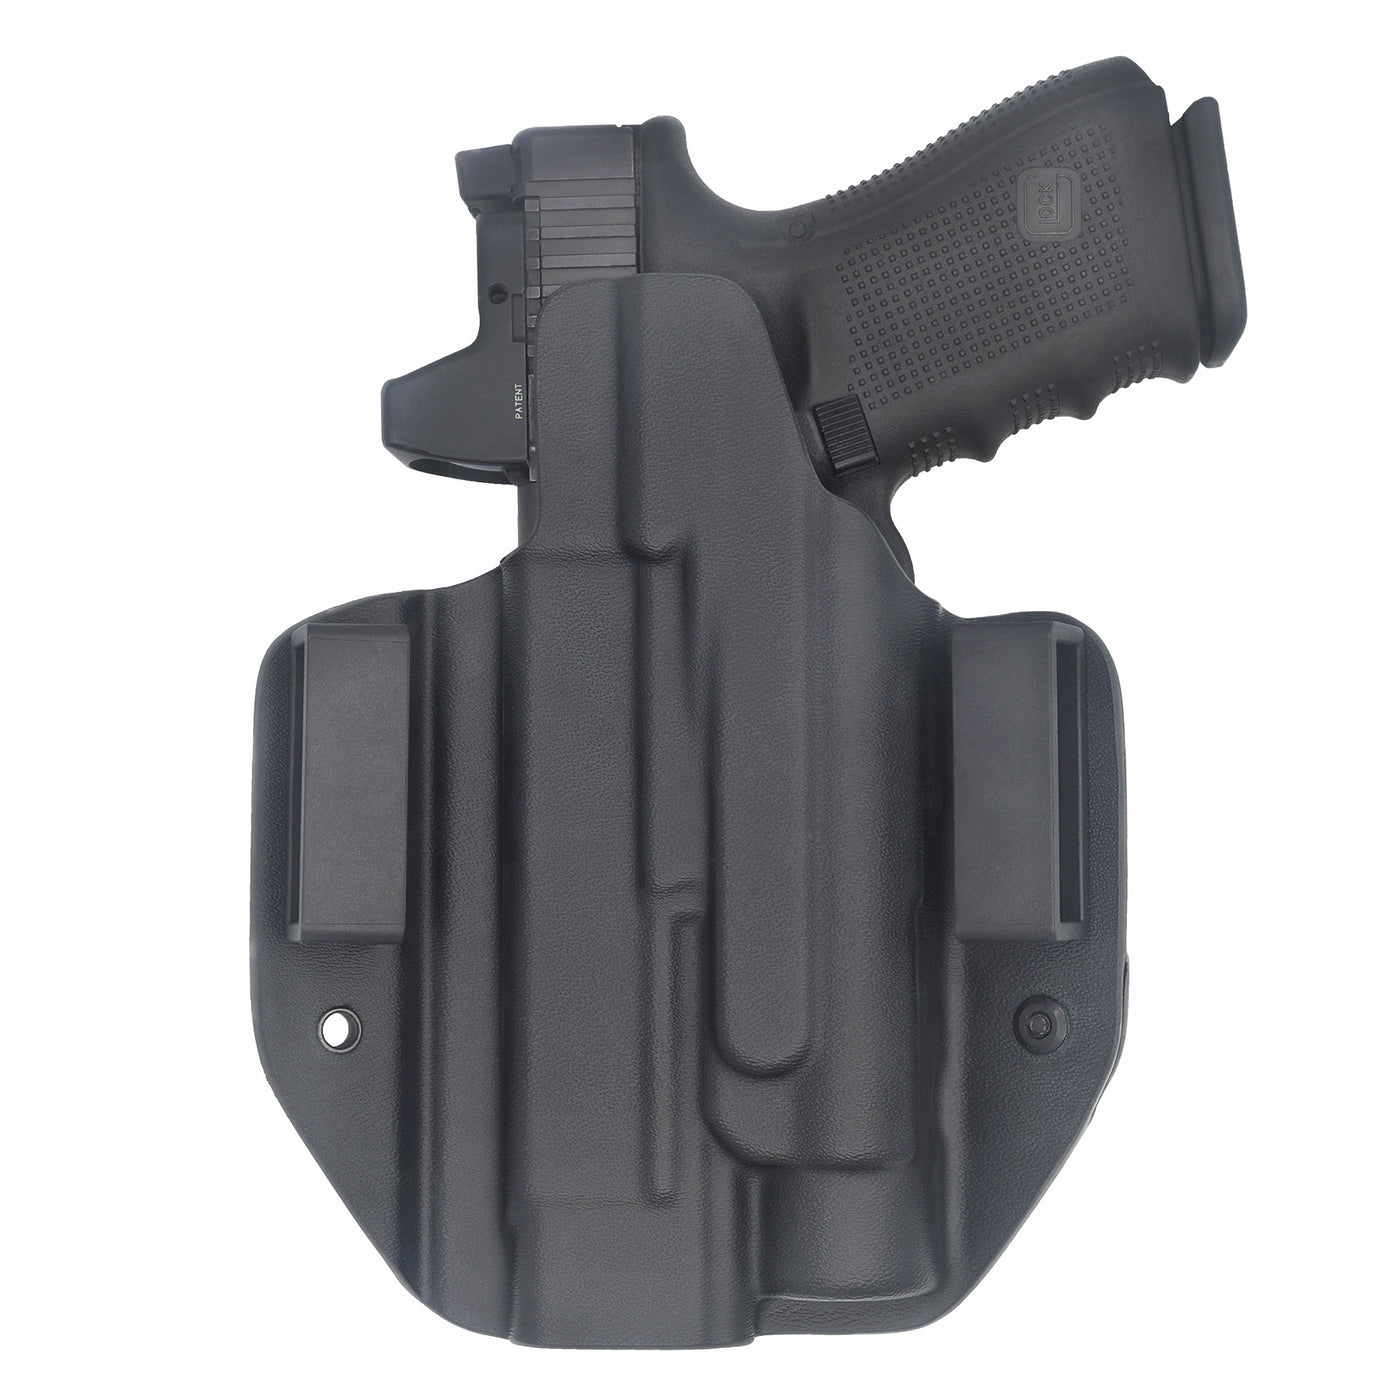 C&G Holsters Quickship OWB Tactical Glock Streamlight TLR1/HL in holstered position back view